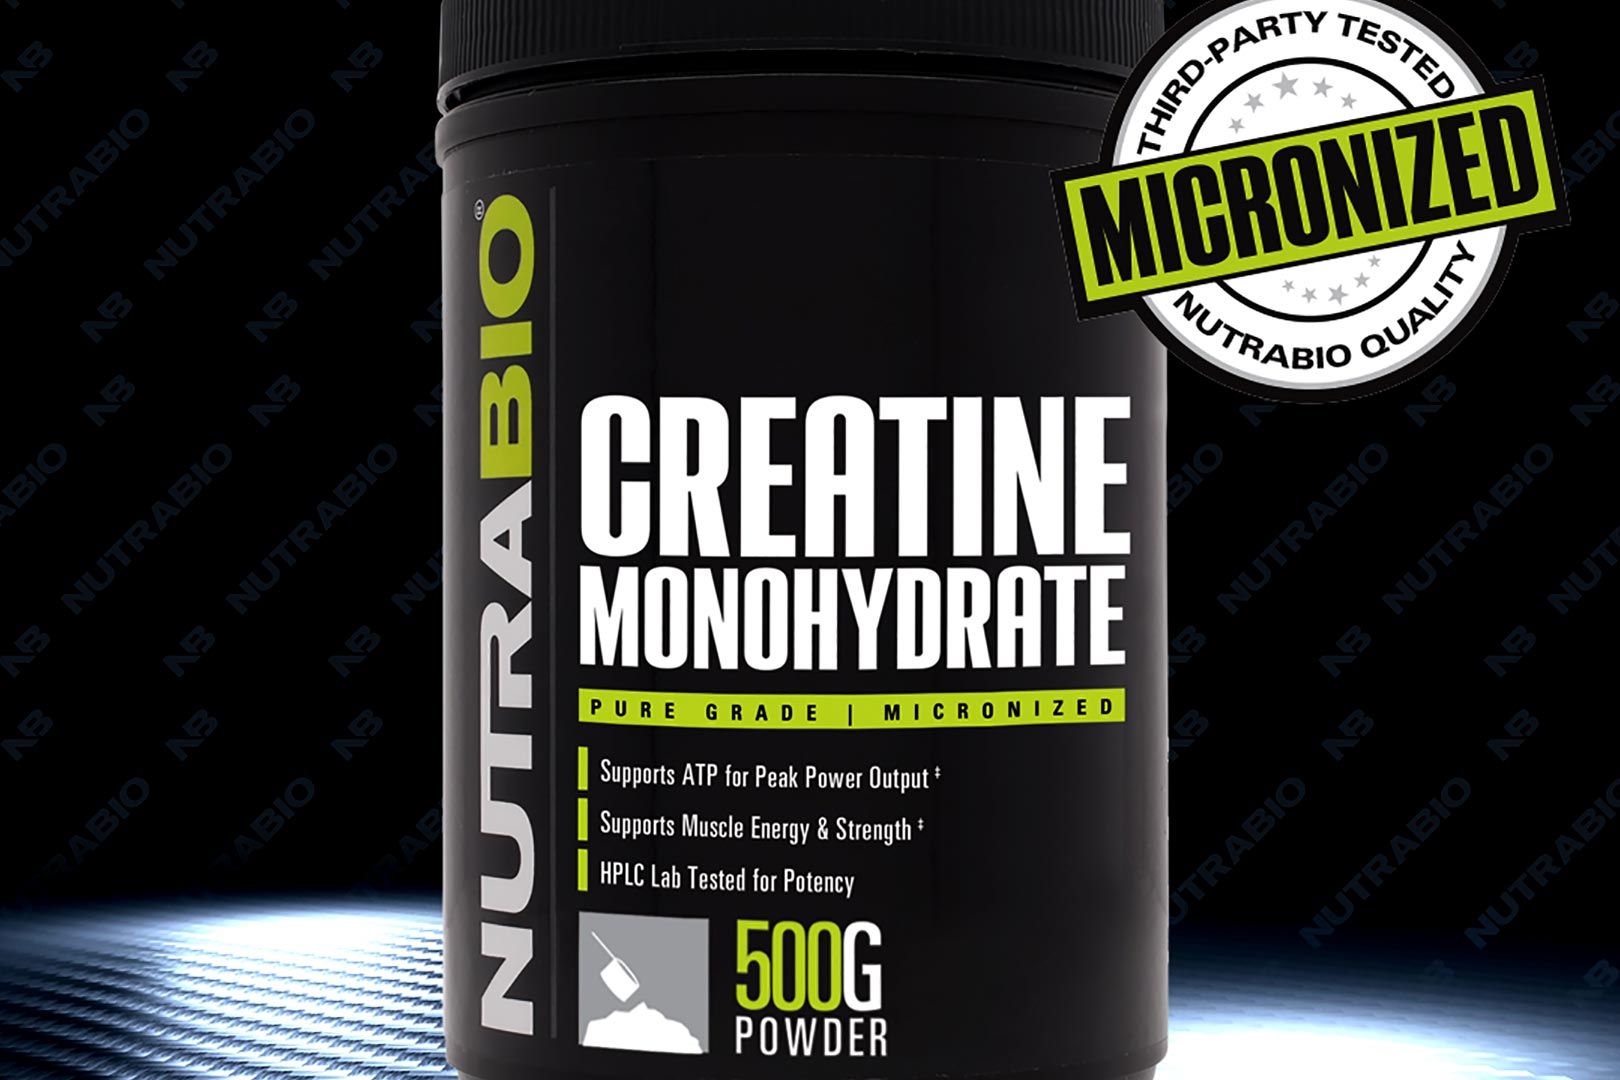 Nutrabio 500g Micronized Creatine